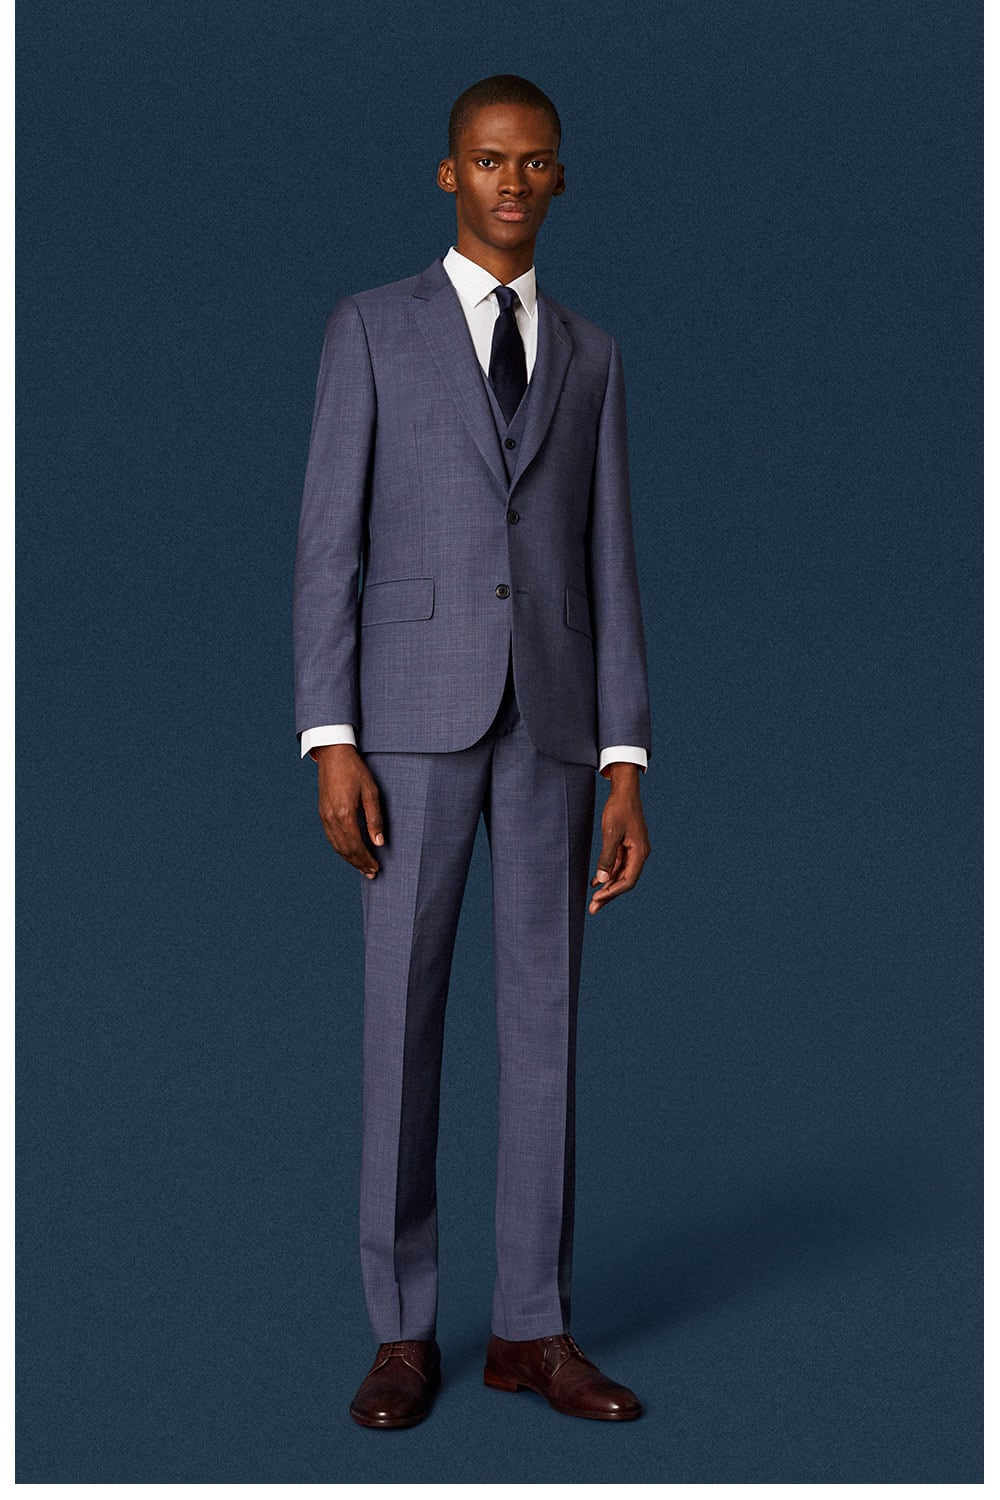 Suit Fit Guide :: PaulSmith